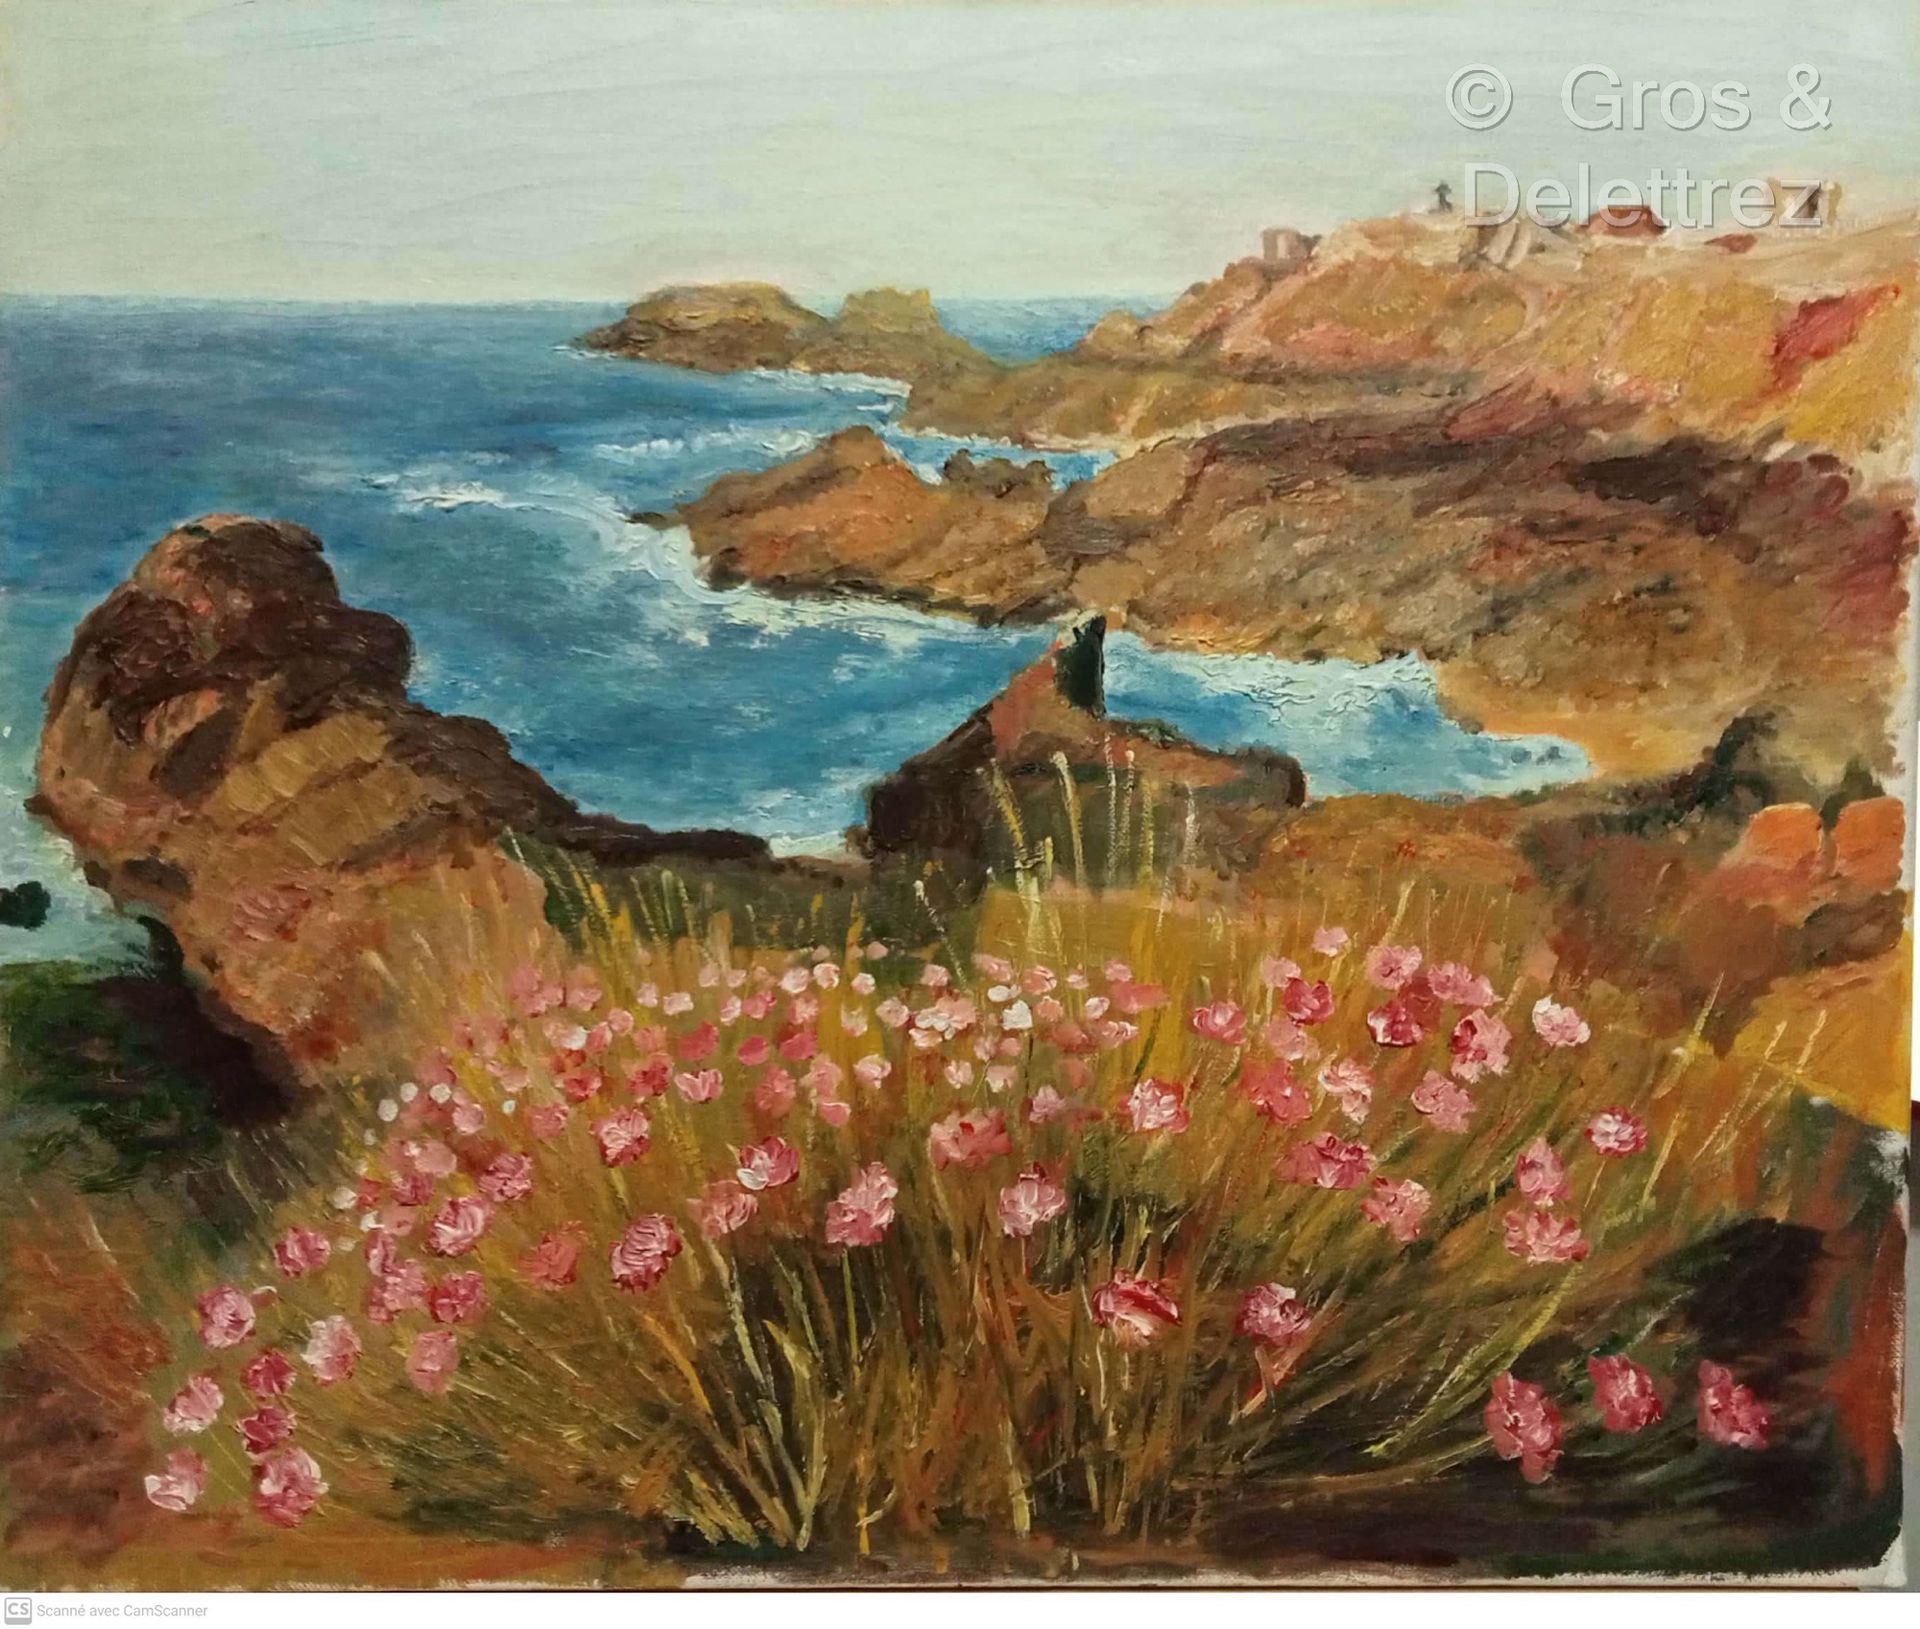 Null (E) 现代学校

有粉红色花朵的岩石海岸

布面油画

46 x 55厘米

附带:

当代学校

绿色和紫罗兰色调的抽象构图

46 x 55厘米